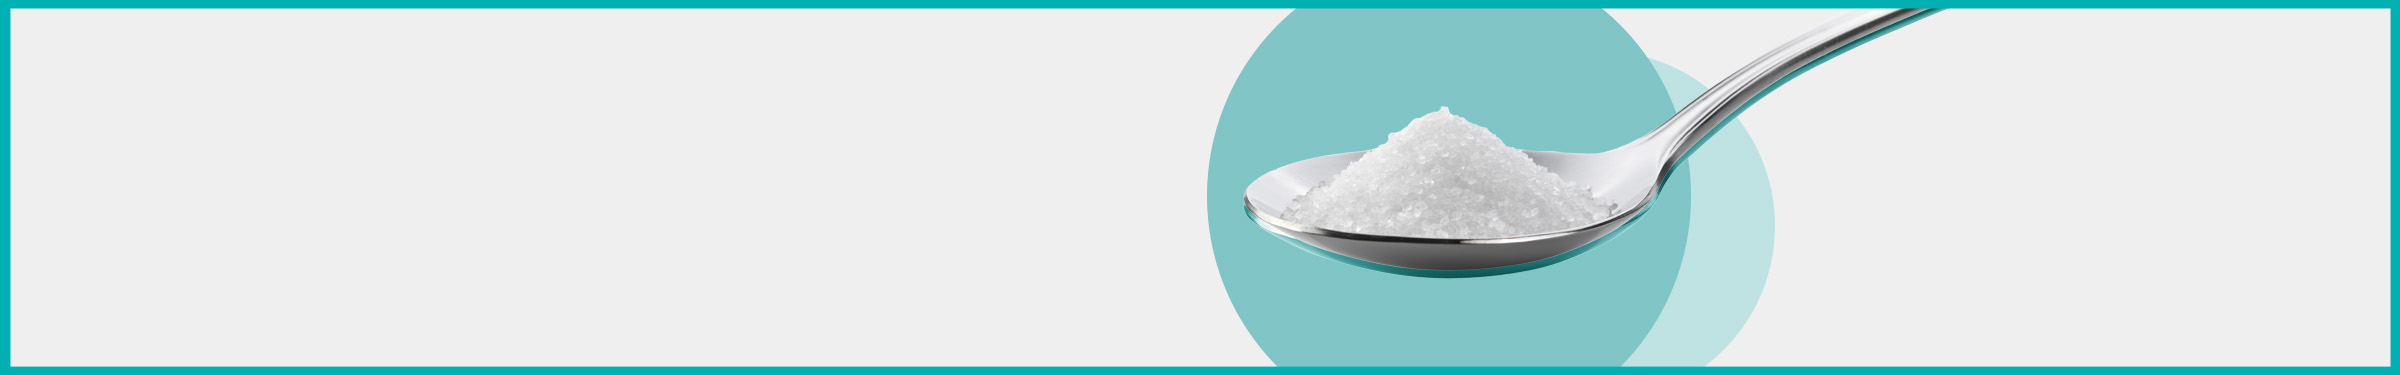 Are Potassium Salt Substitutes Safe and Effective?